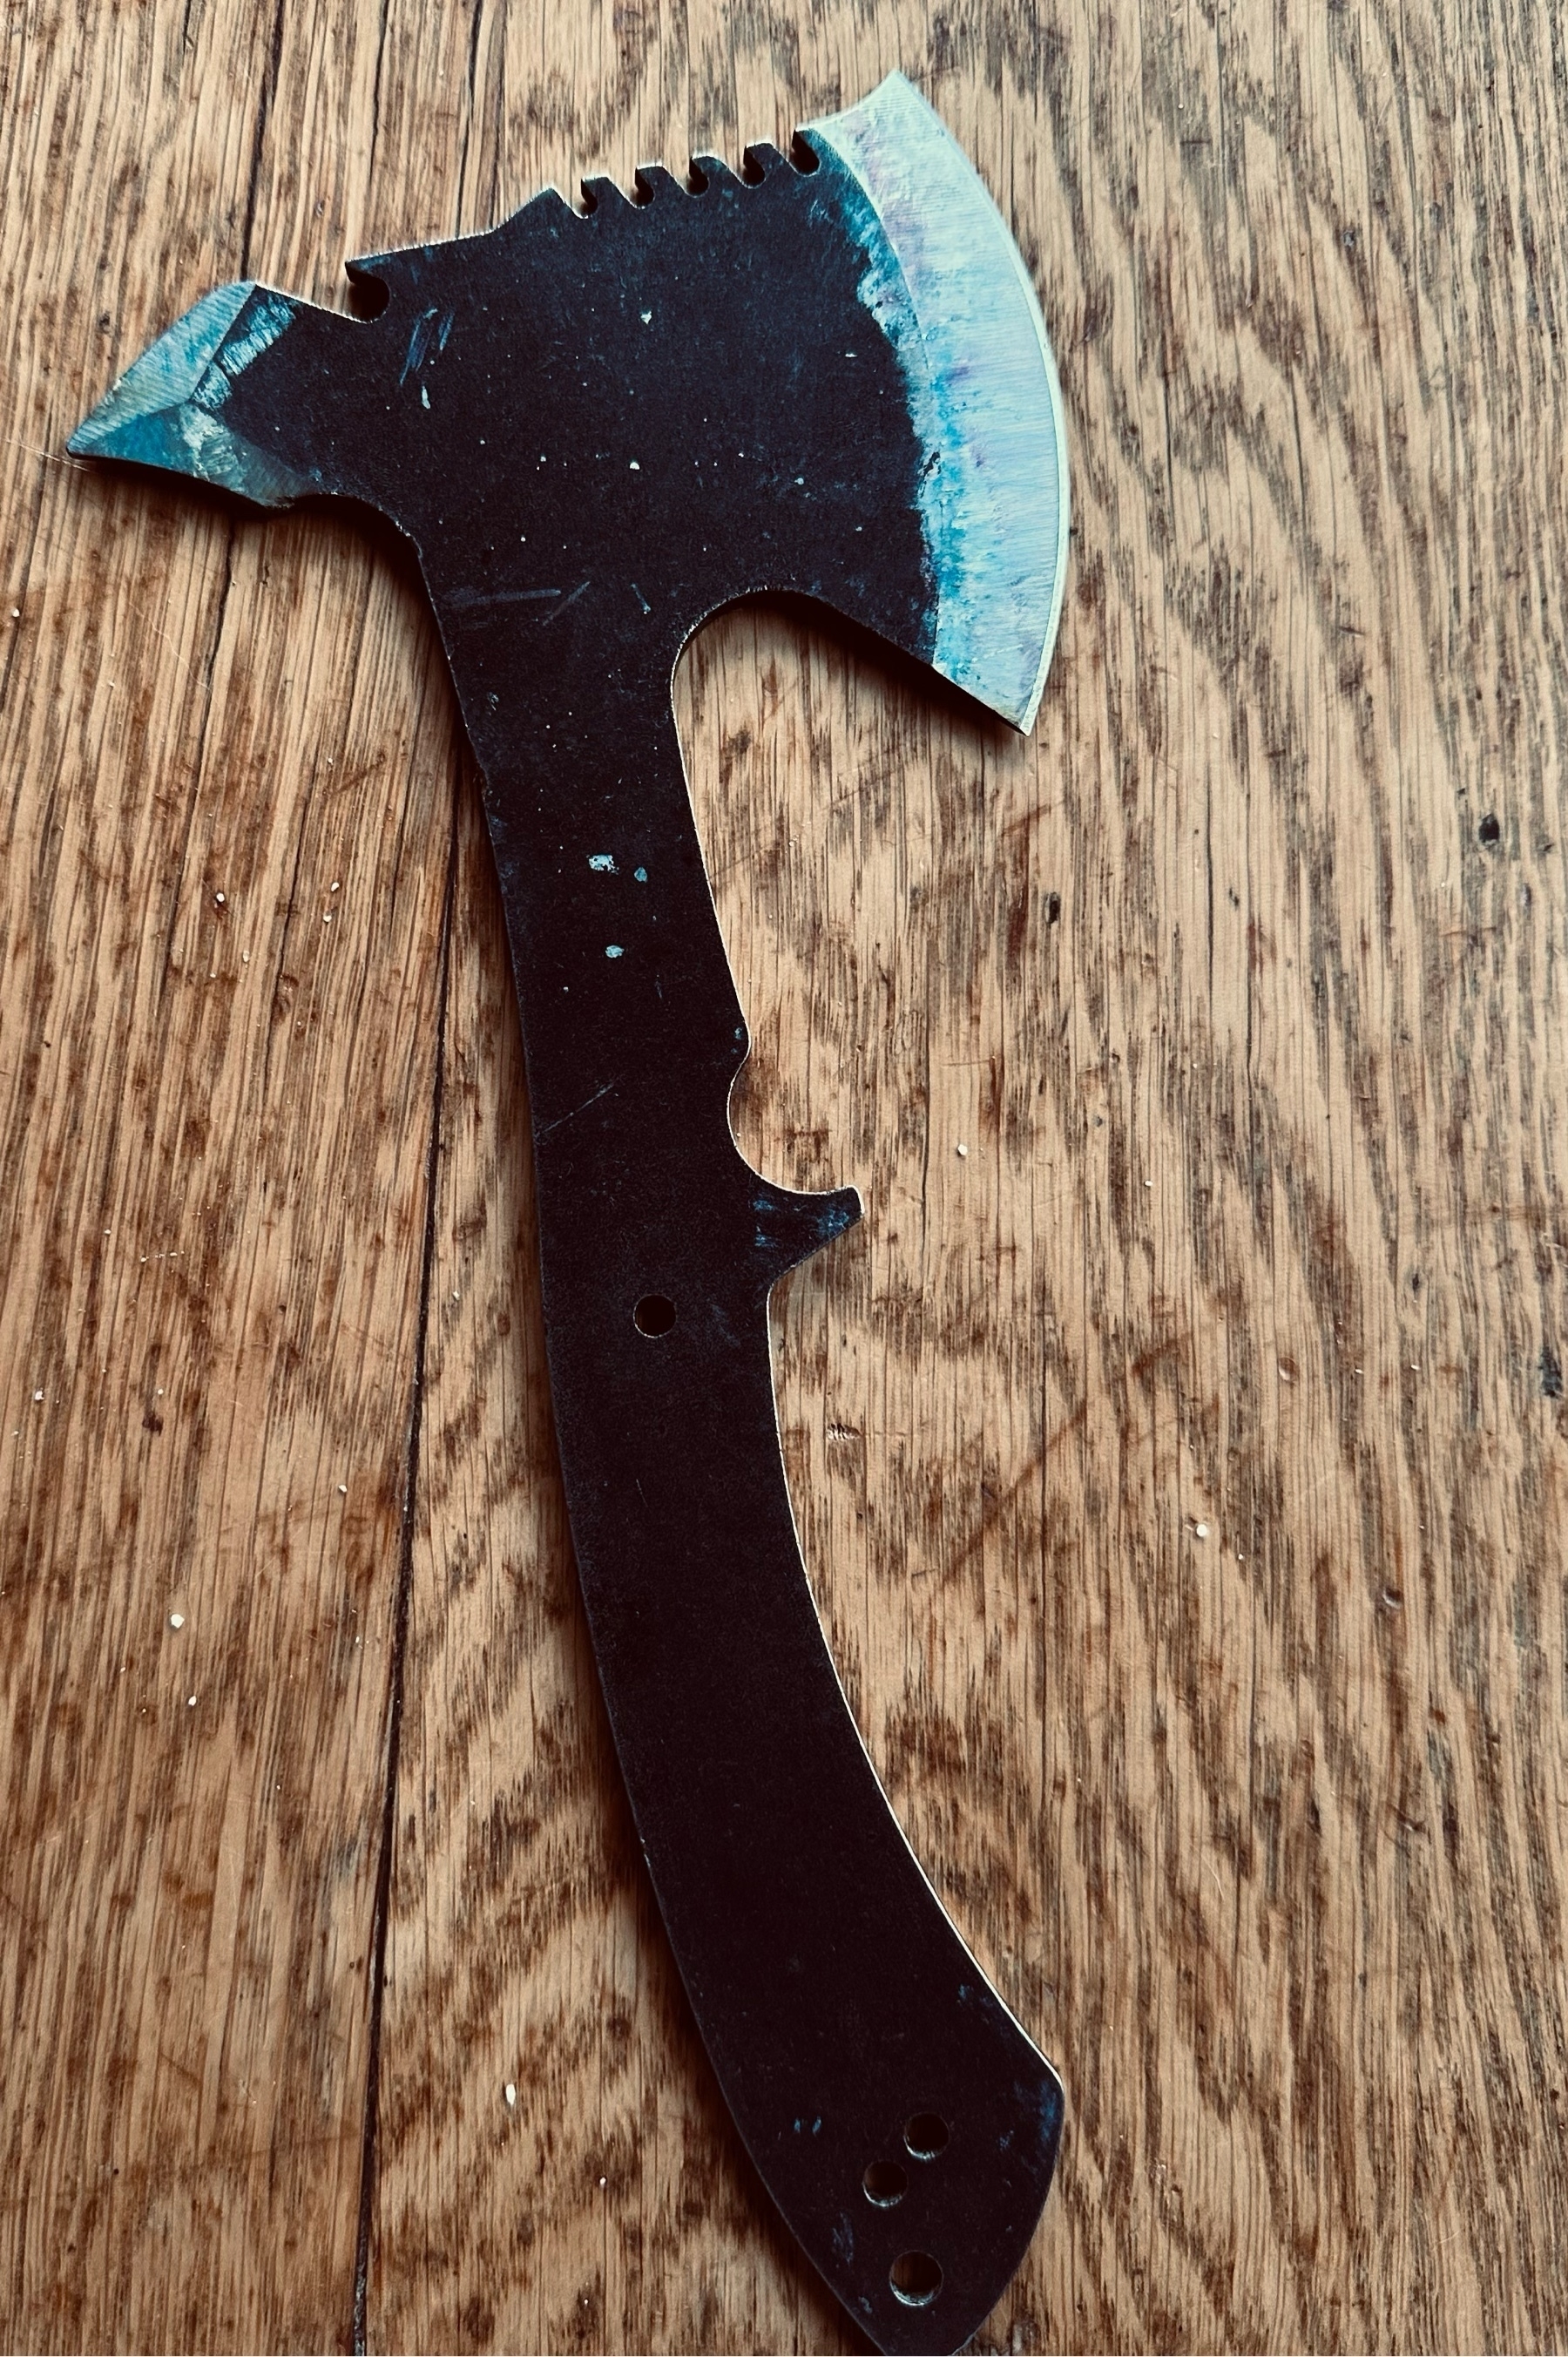 the day's roadside find: an axe / hatchet devoid of handle.